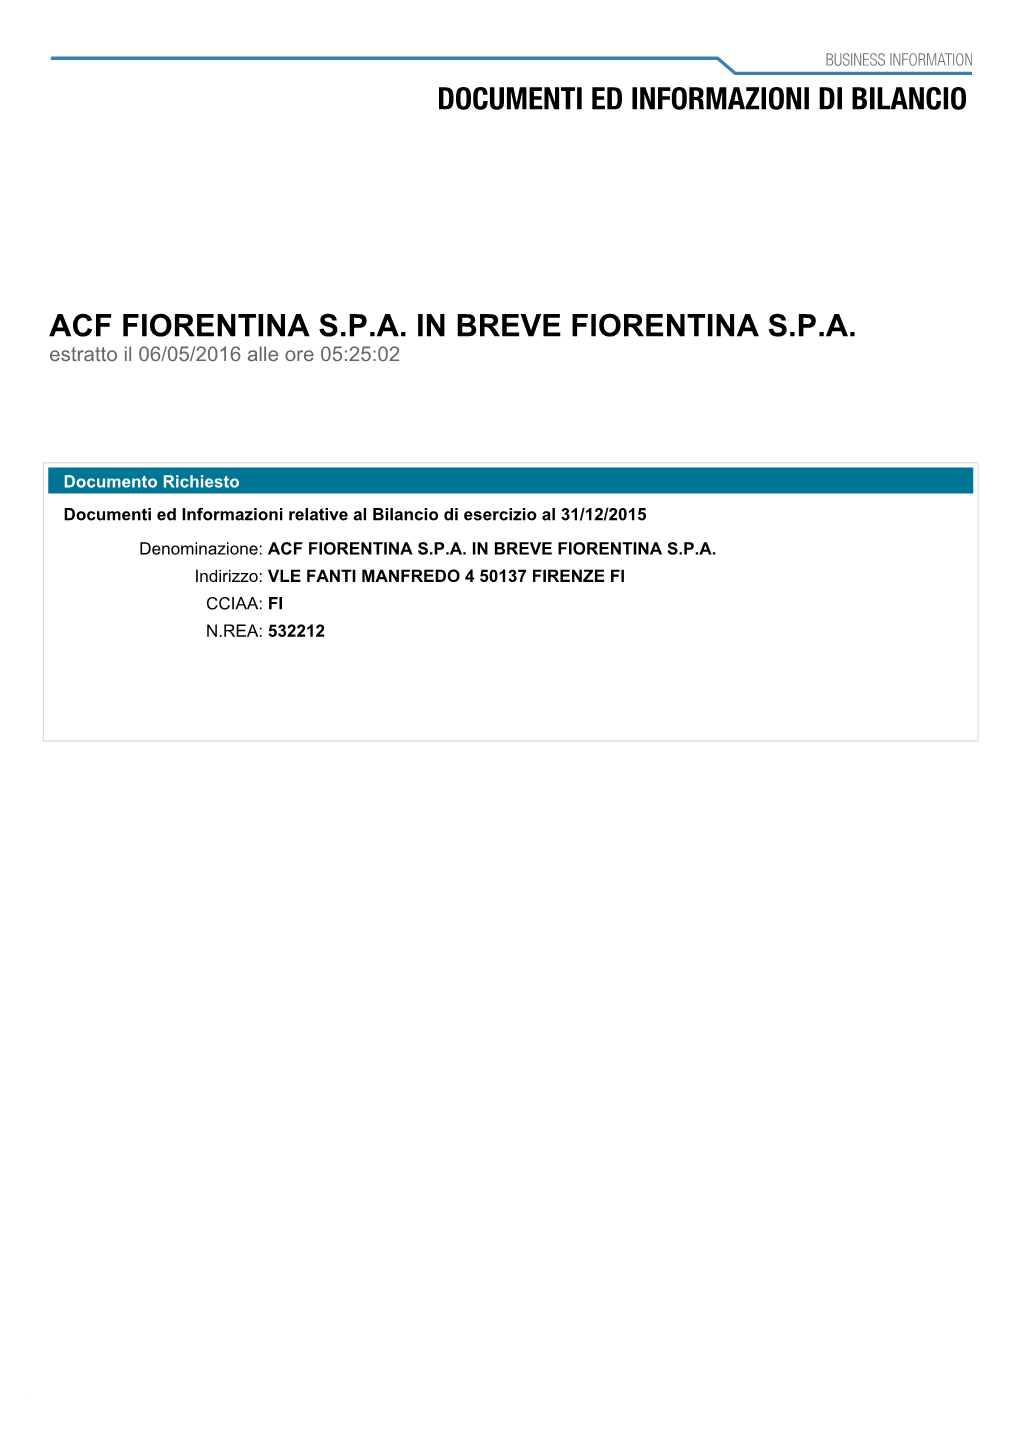 Bilancio Fiorentina ACF File